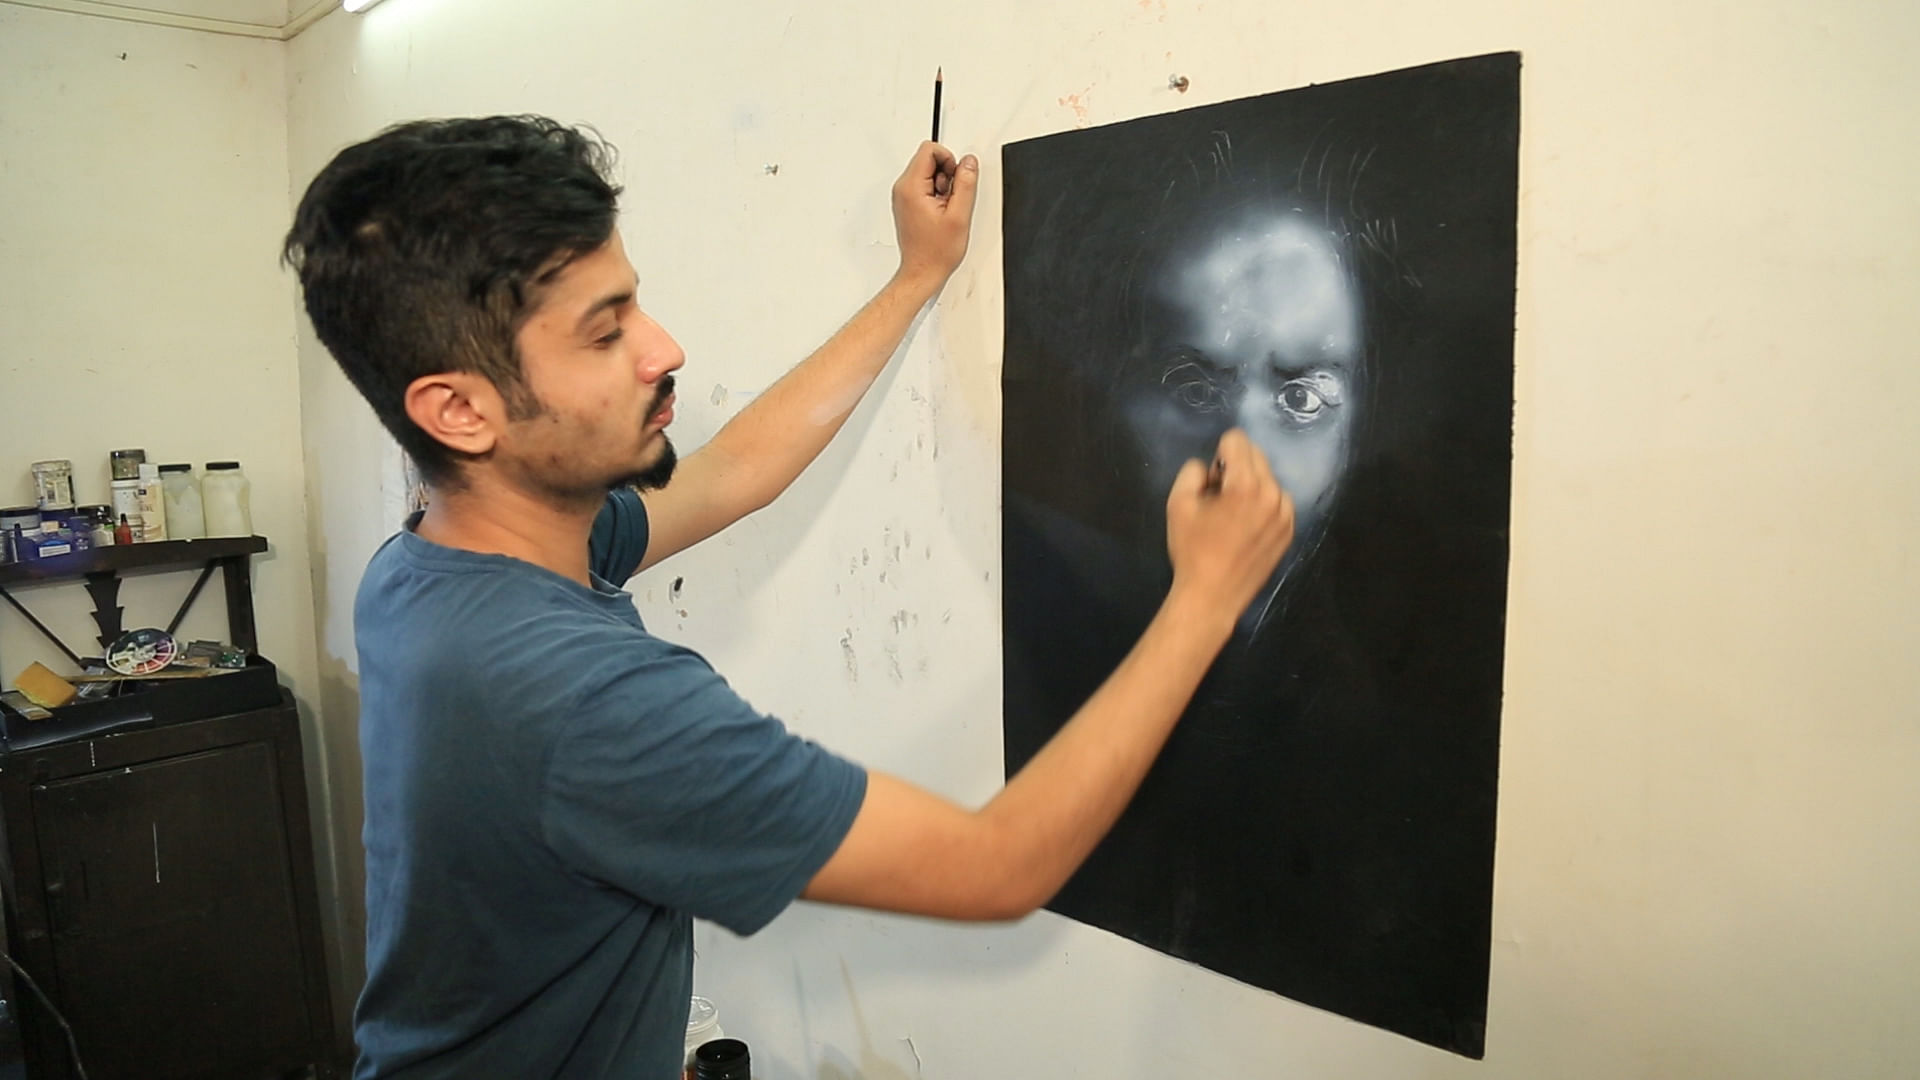 Viraag Desai uses the airbrush to make SRK’s portrait.